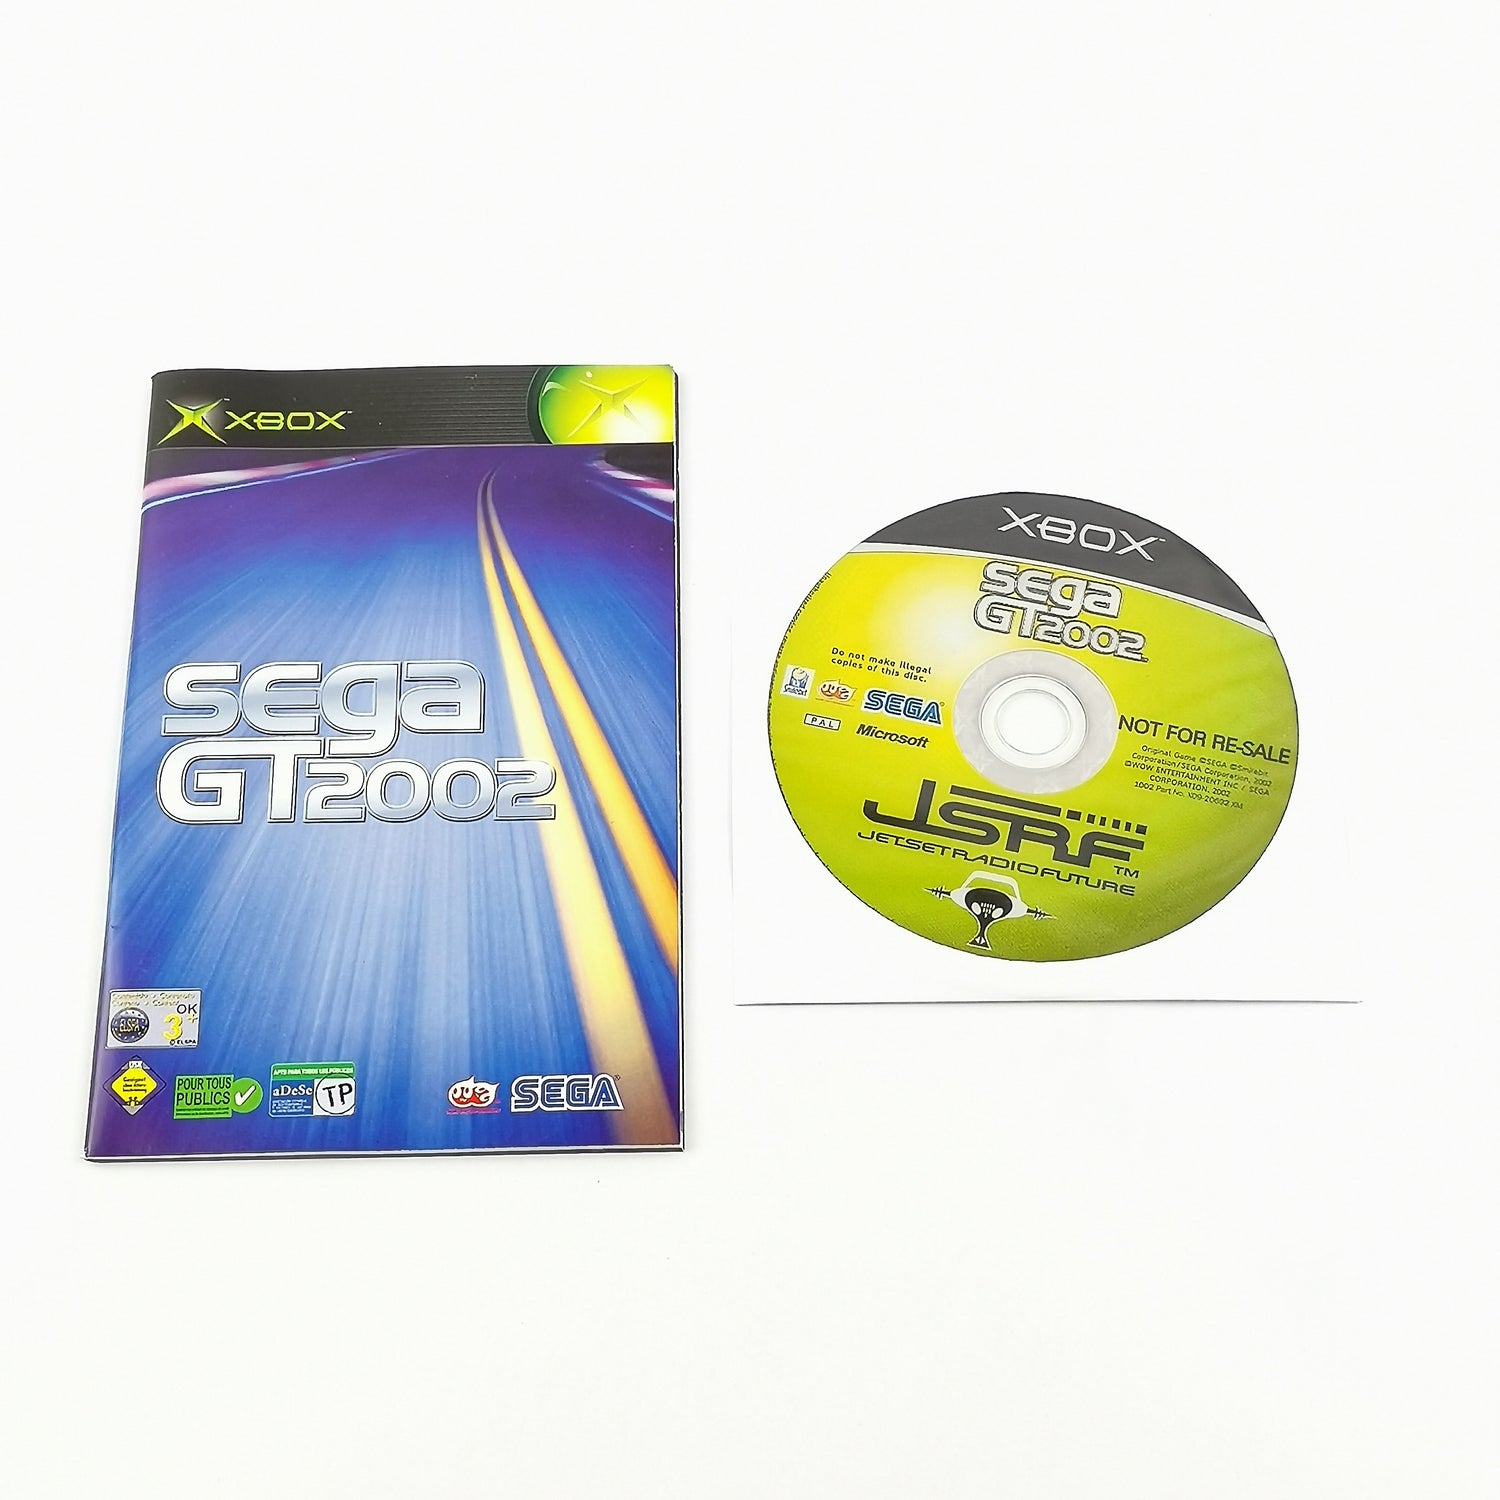 Xbox Classic Game: Sega GT 2002 & Jetset Radio Future - Not for Resale